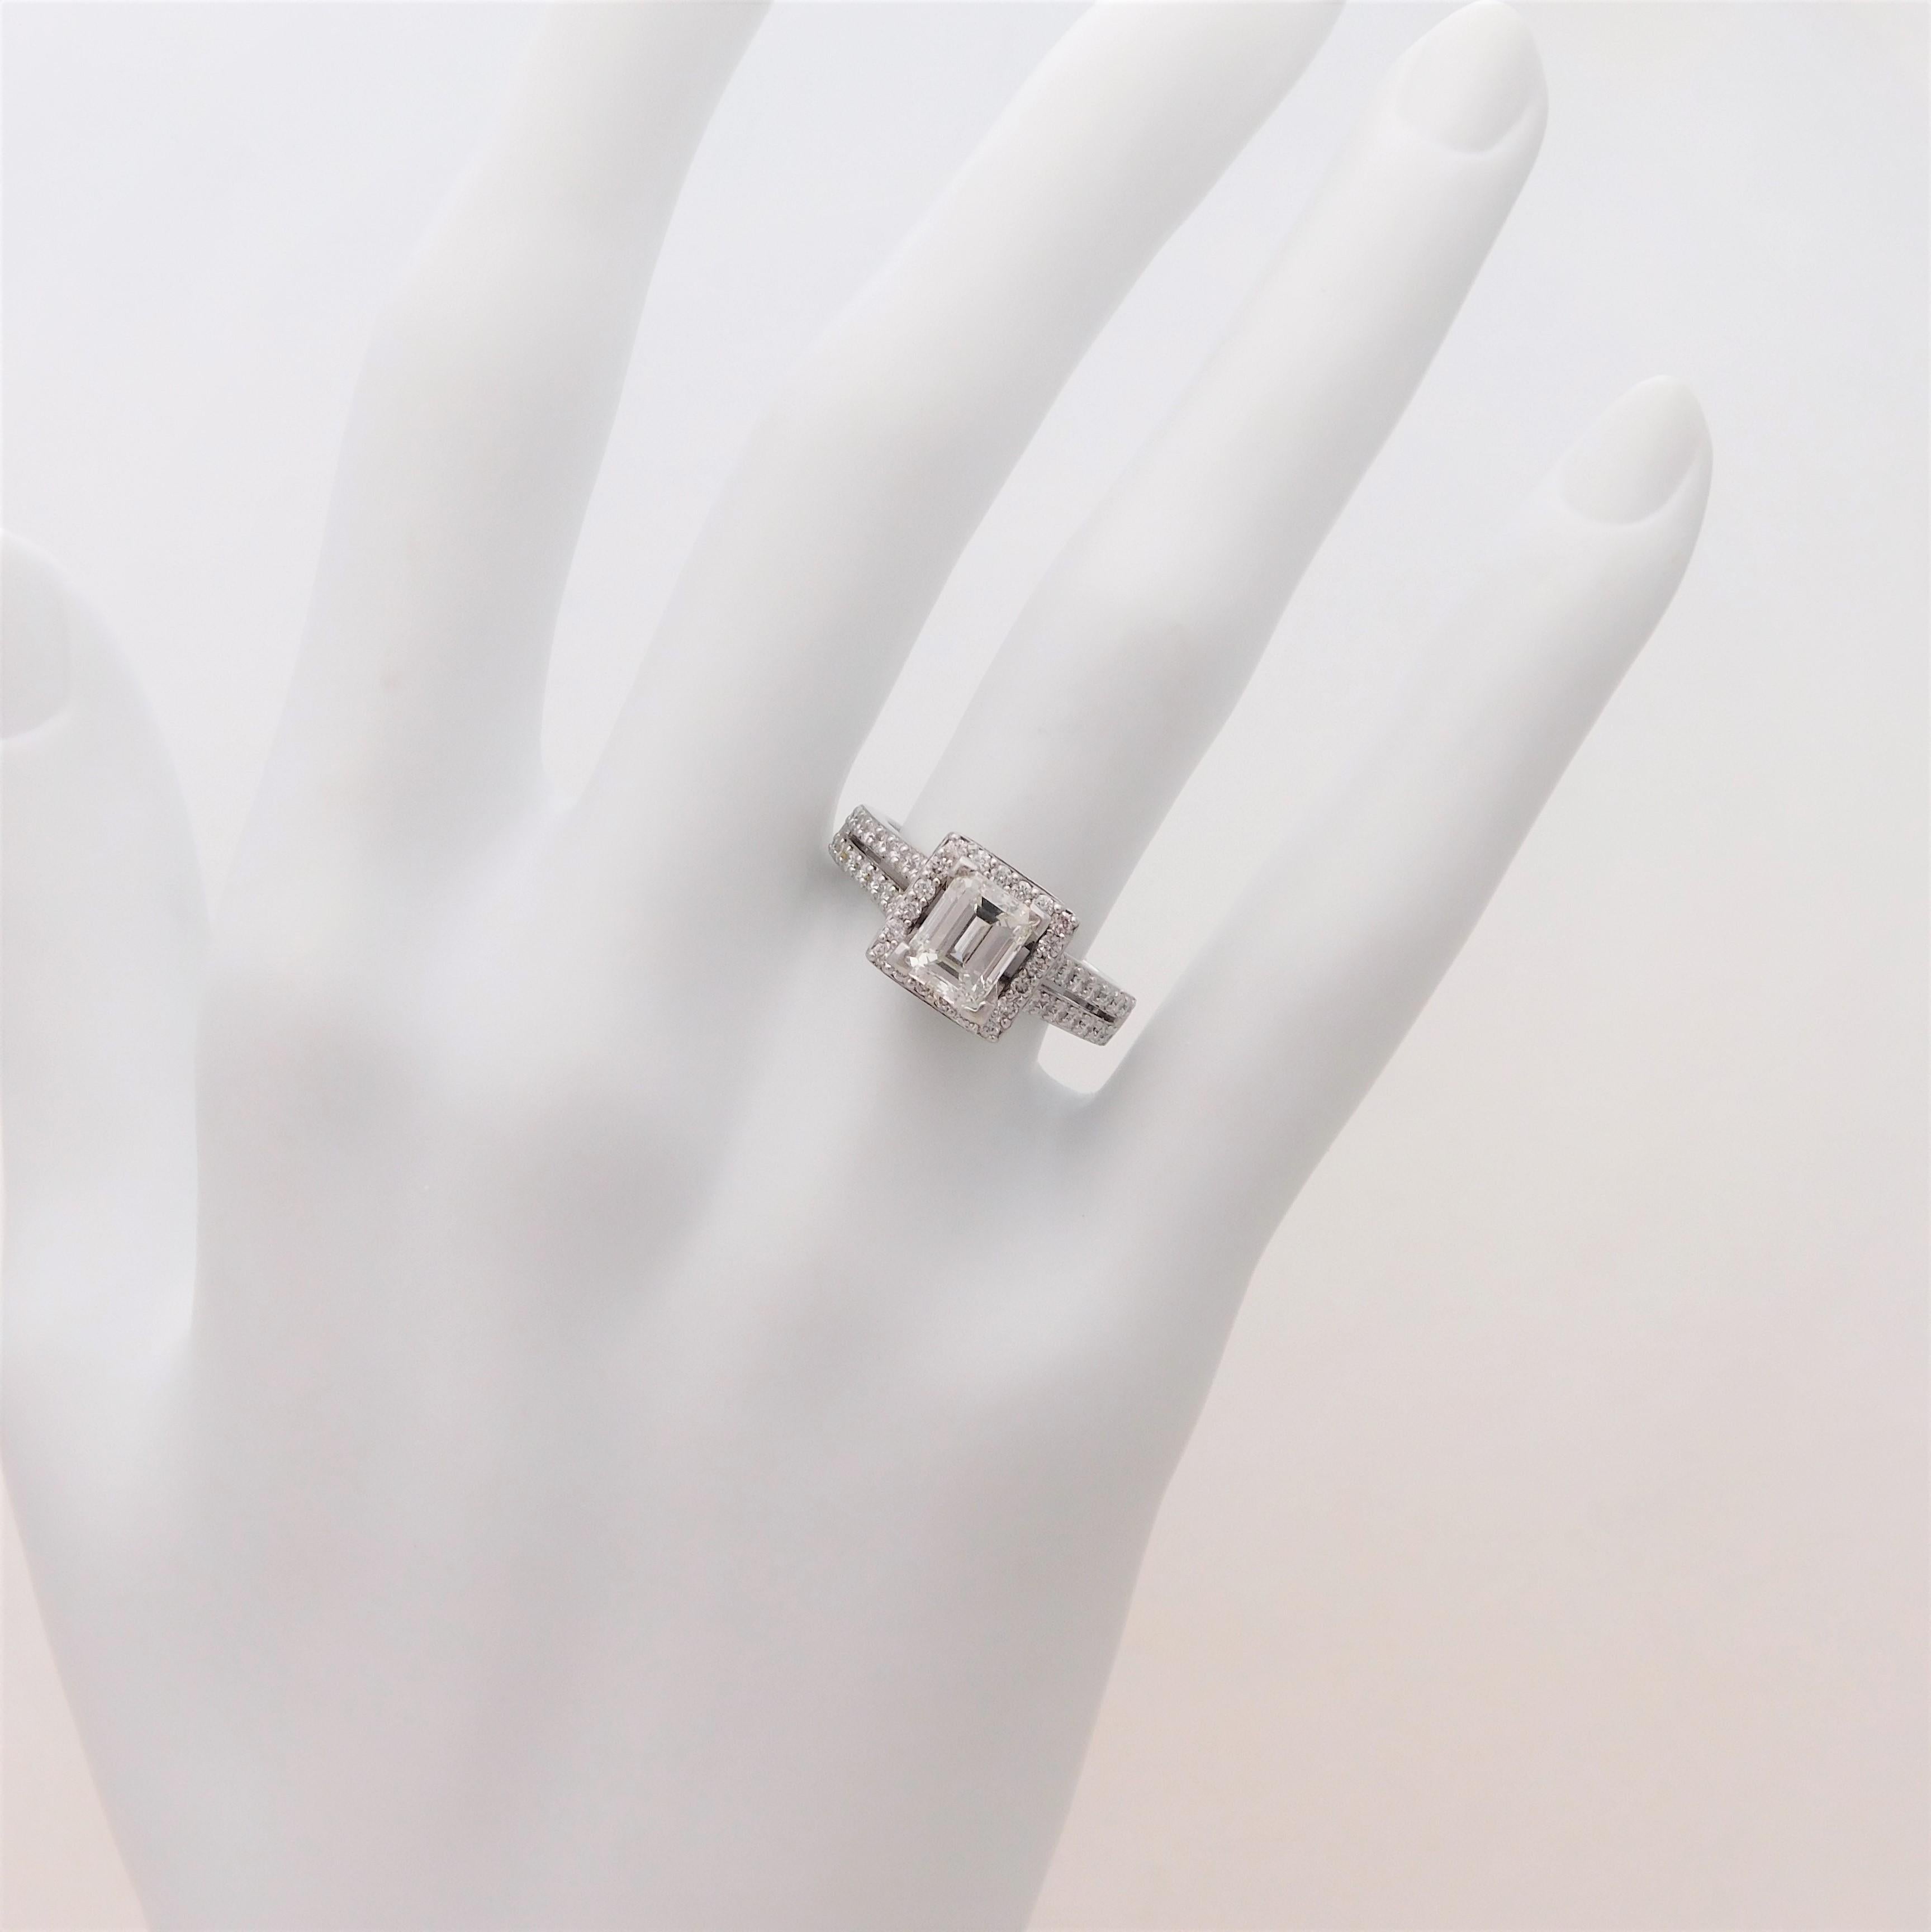 UGS Certified 2.18 Carat Emerald Cut Diamond Engagement Ring 10